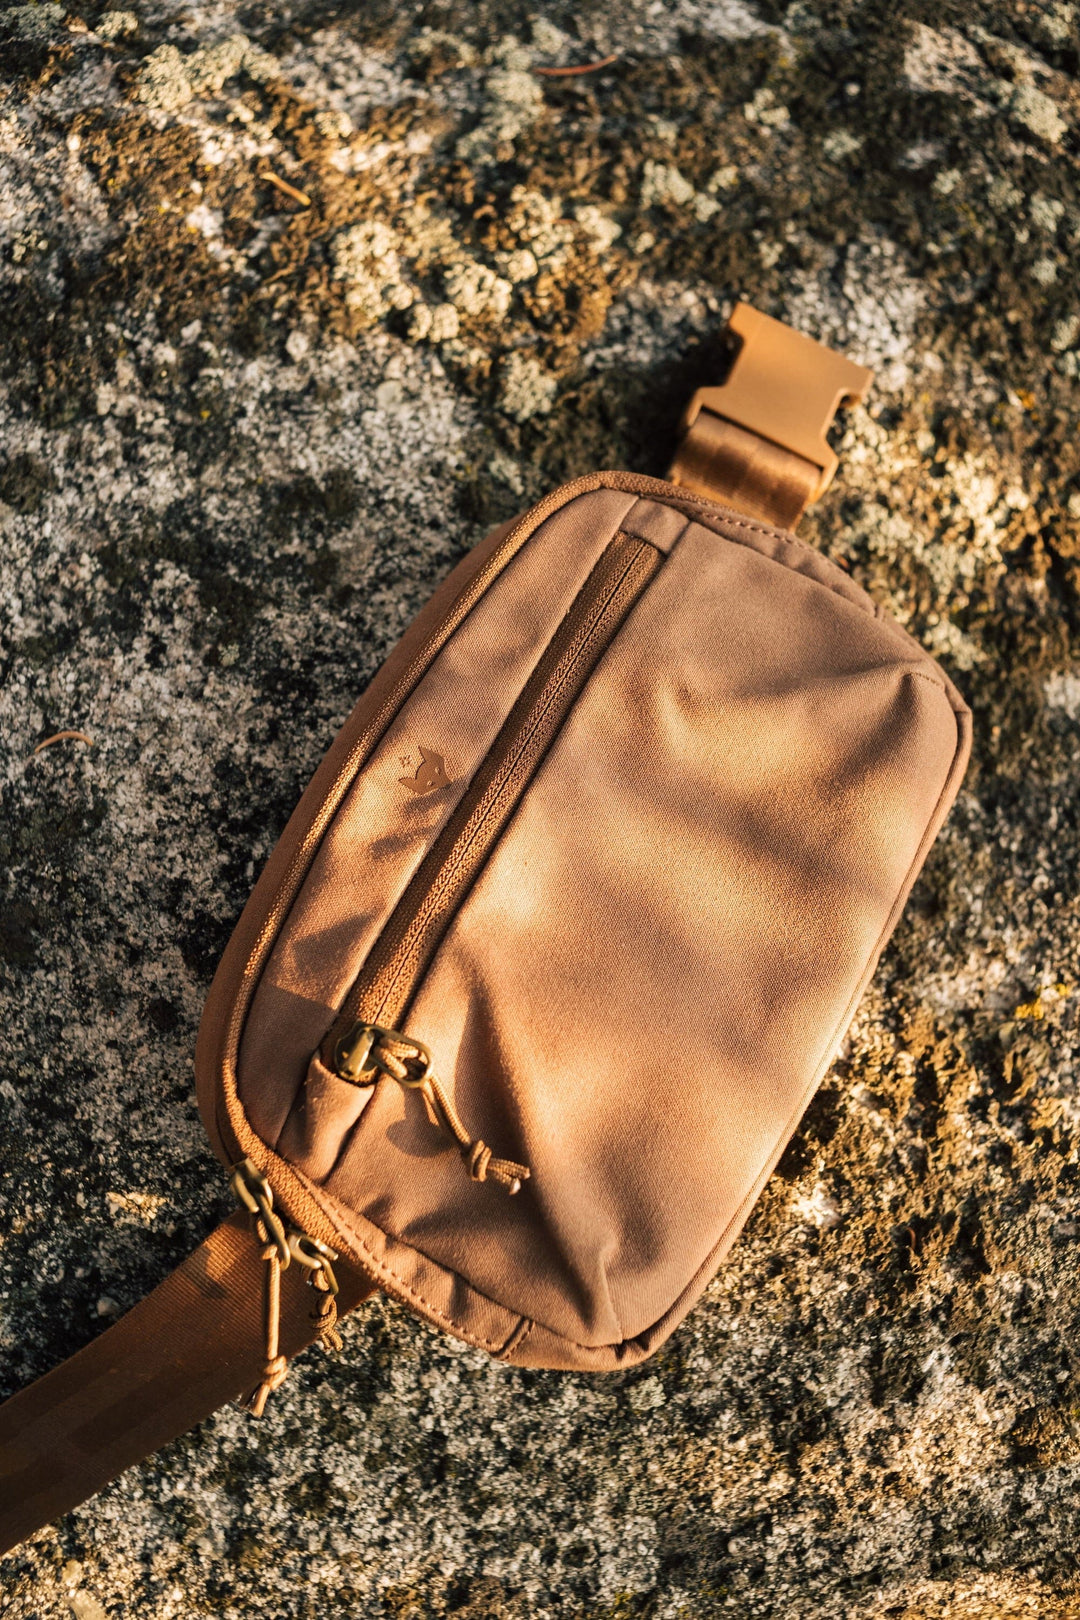 Clever Supply Co Sidekick Belt Bag - Tan